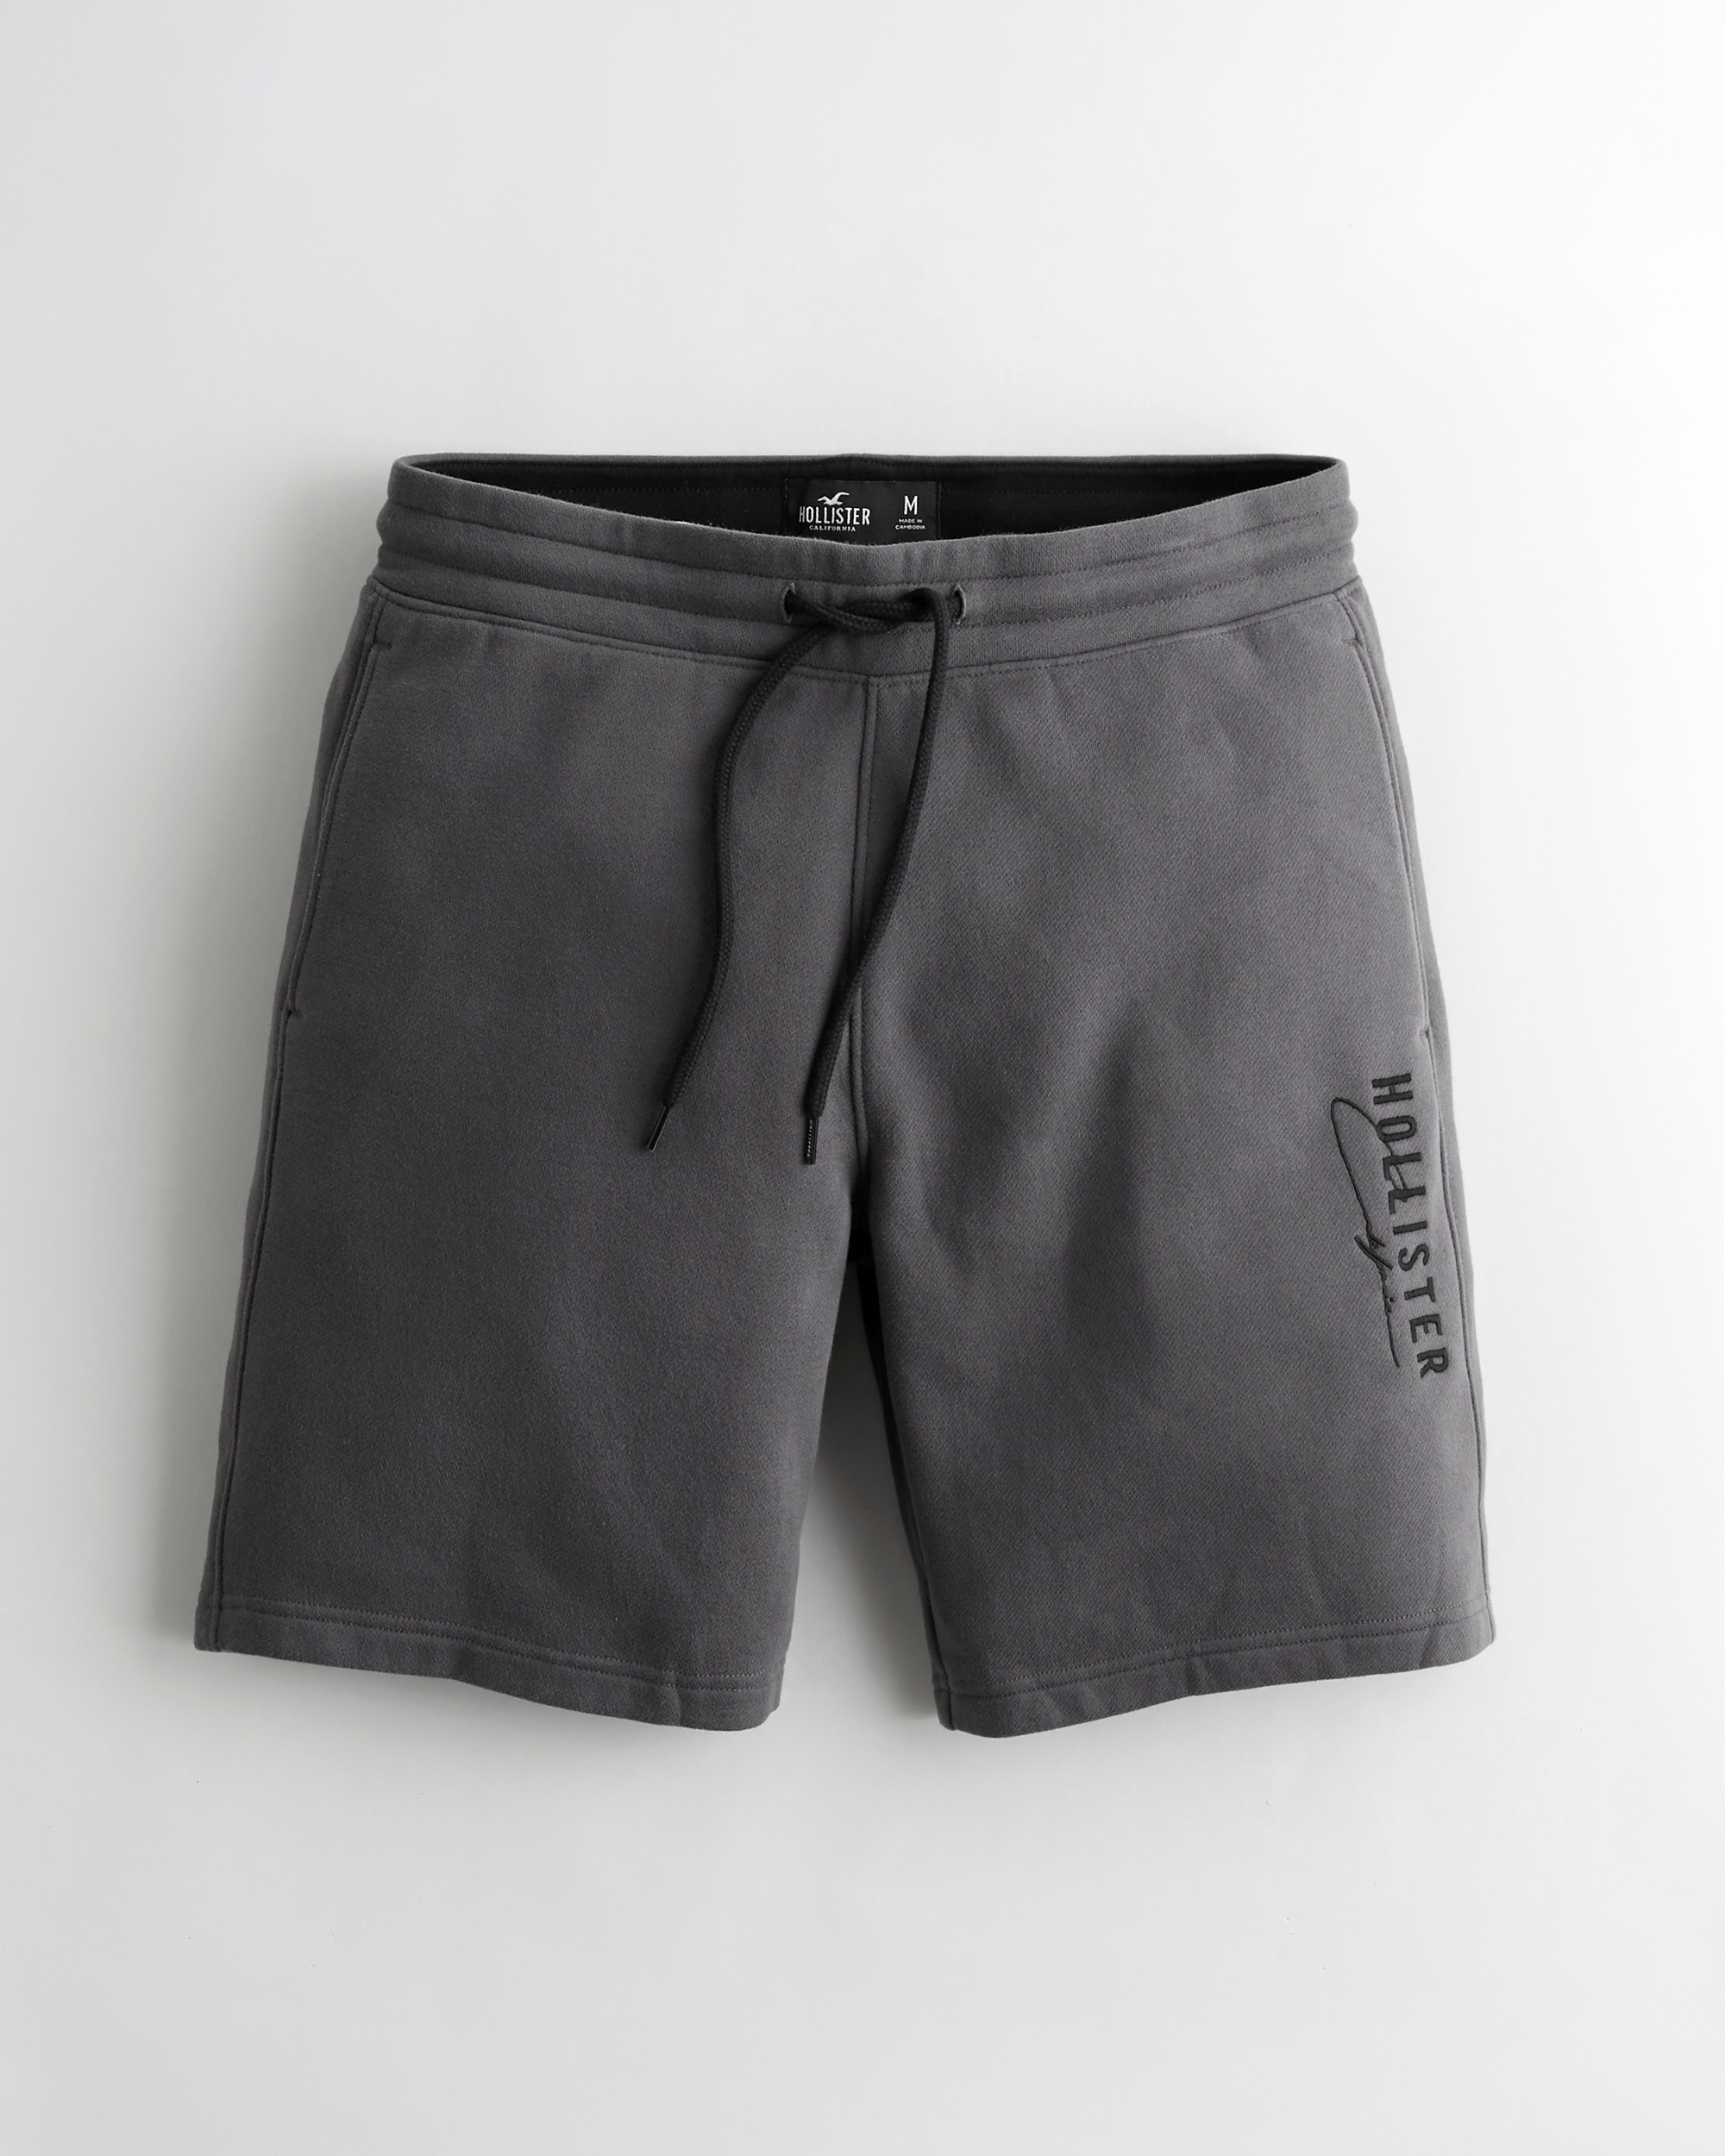 discount hollister shorts